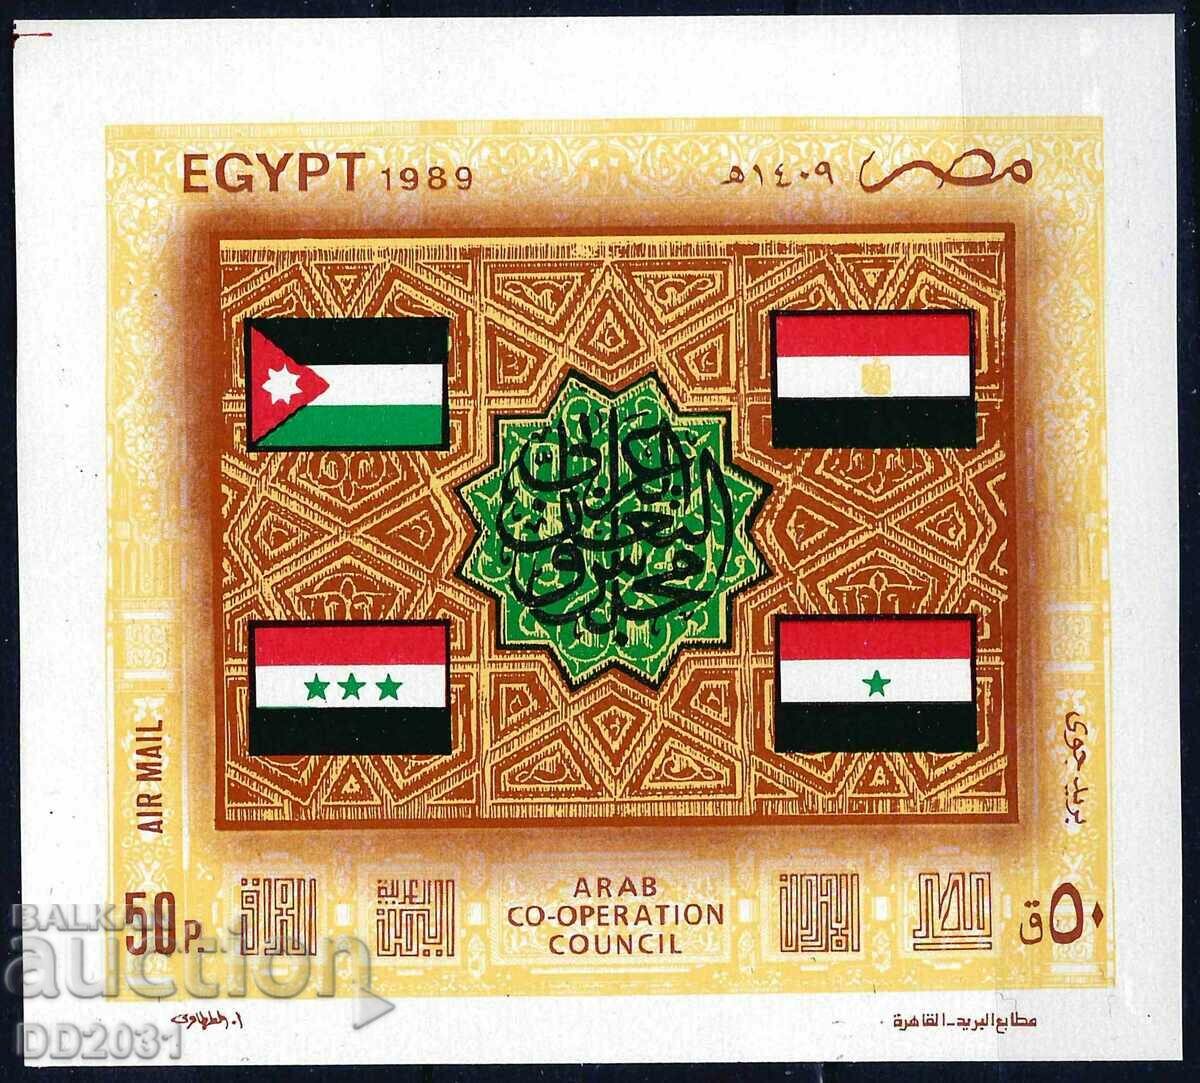 Egypt 1989 - MNH flags